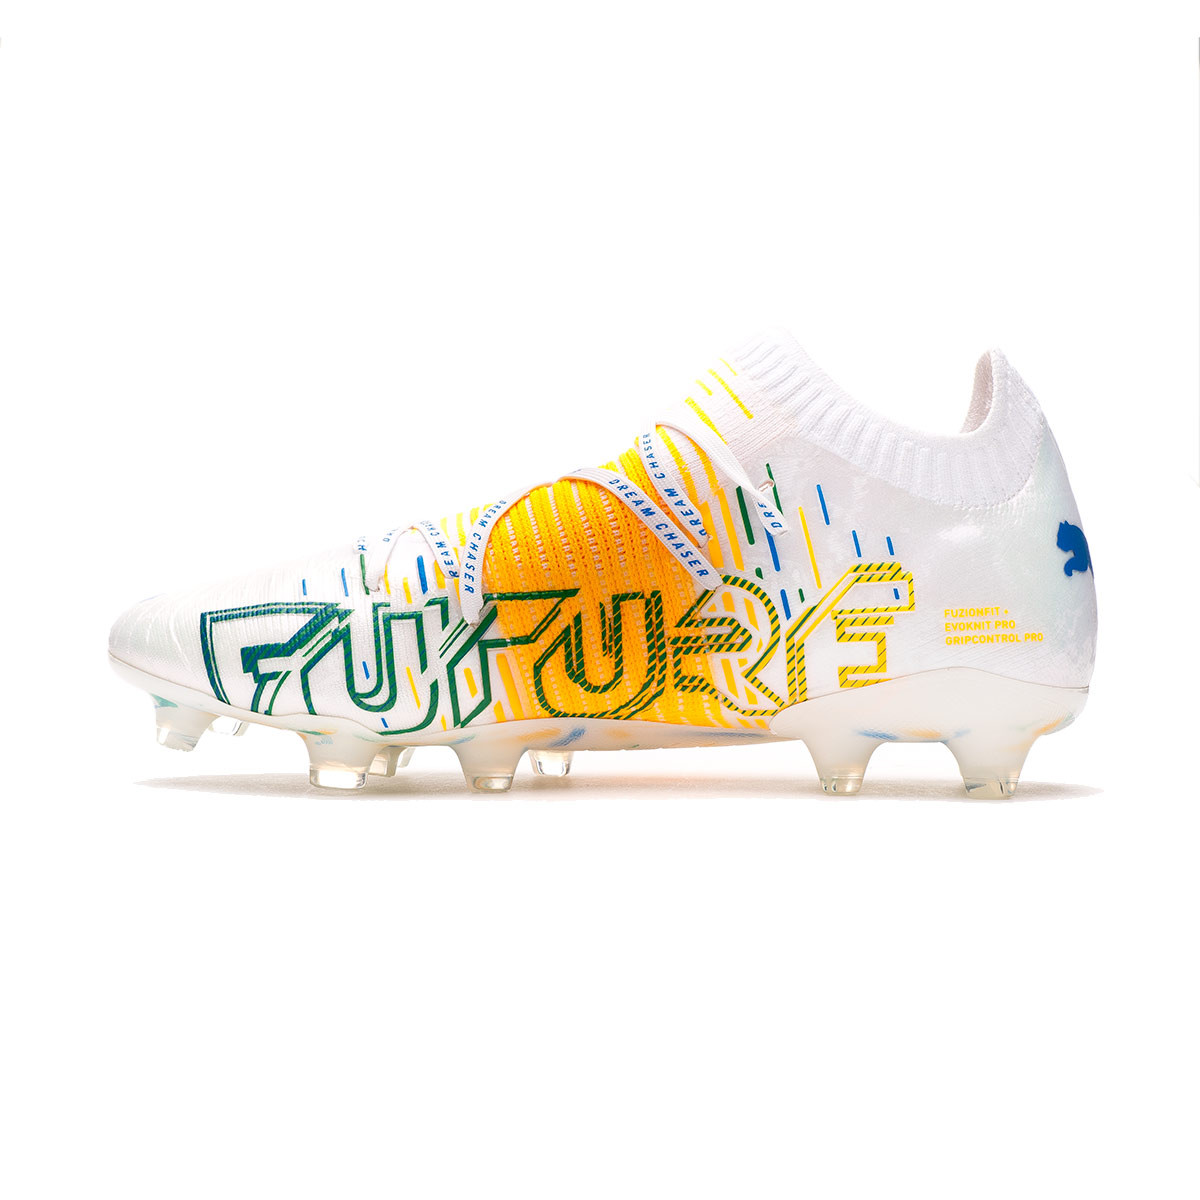 Football Boots Puma Future Z 1 1 Neymar Jr Fg Ag White Yellow Blue Futbol Emotion